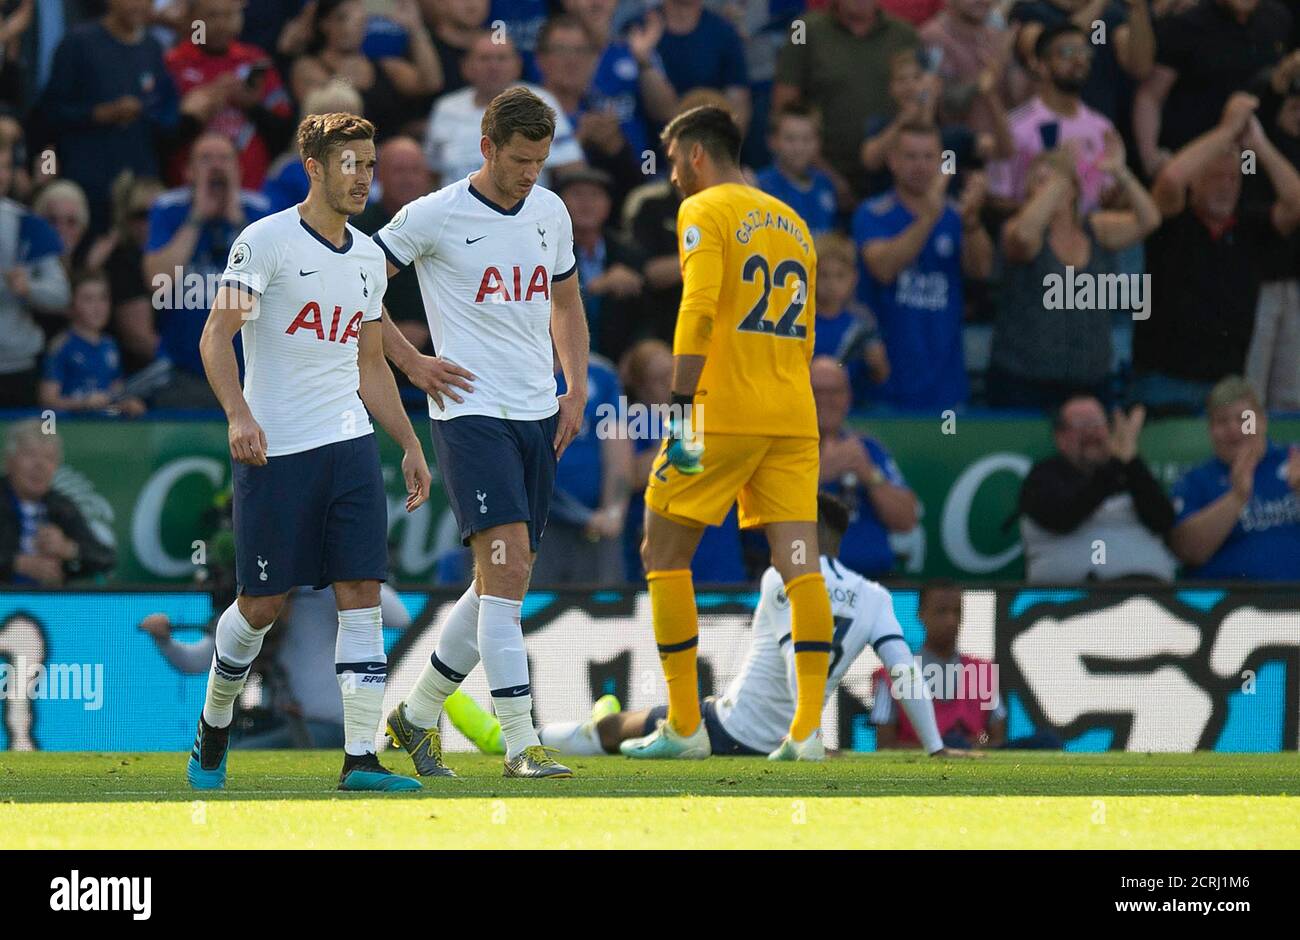 Jan Vertonghen e Harry Winks di Tottenham Hotspurs si sono espulsi dopo la sconfitta. PHOTO CREDIT : © MARK PAIN / ALAMY STOCK PHOTO Foto Stock